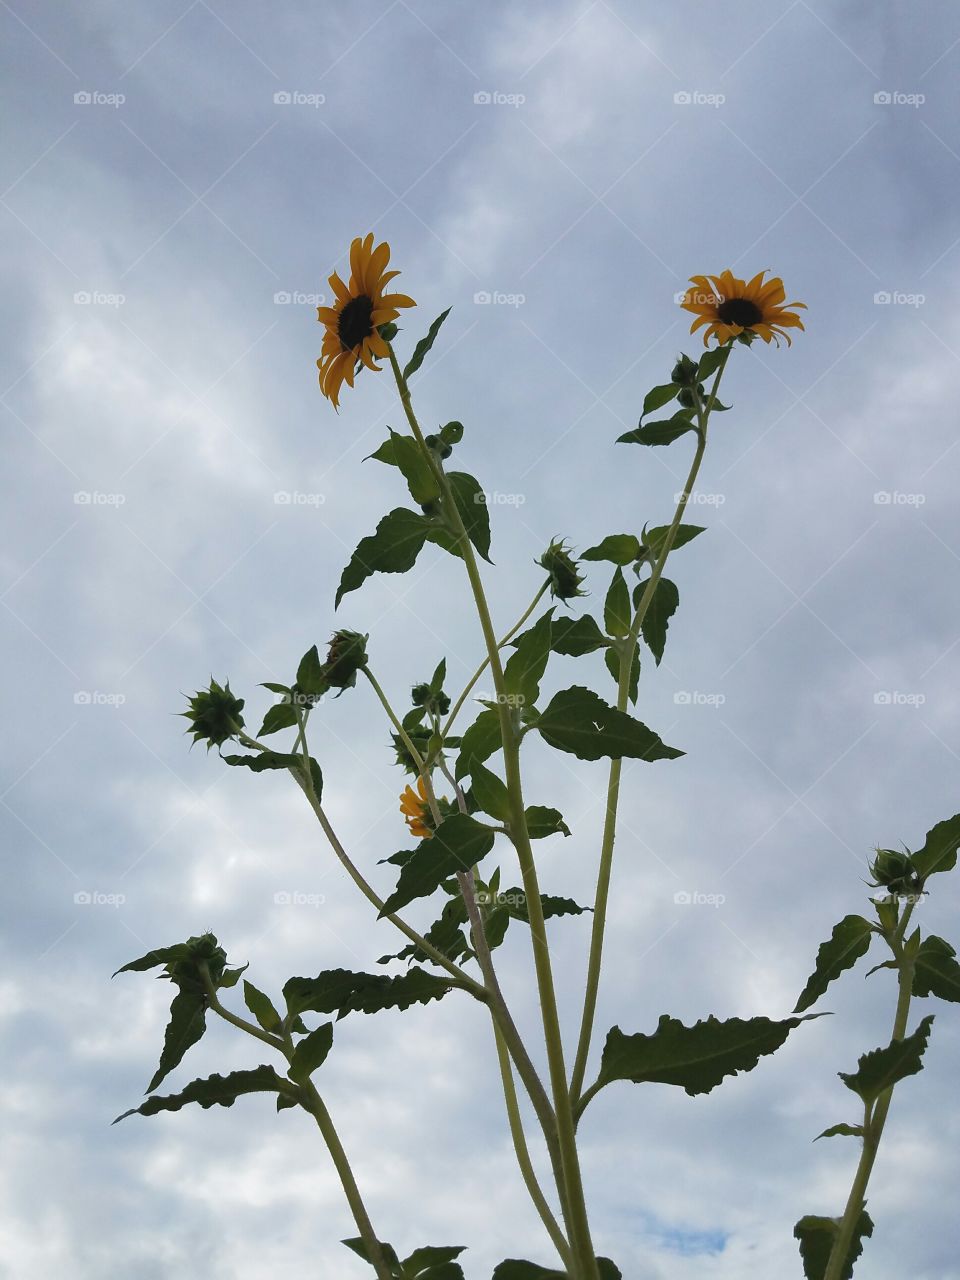 Sunflowerd against clouds